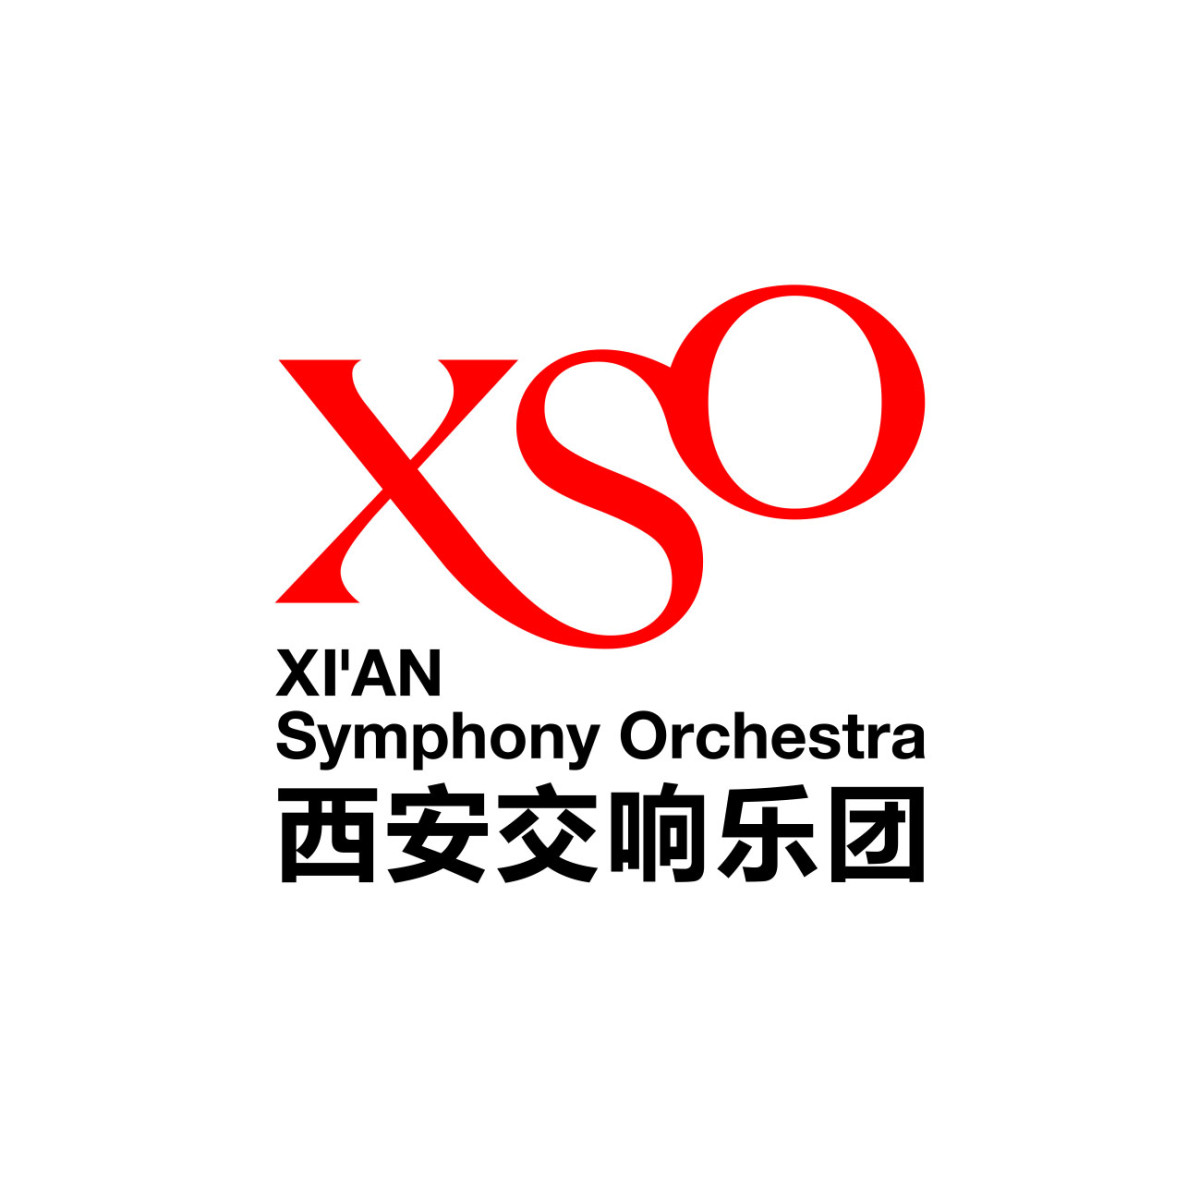 Xi'an Symphony Orchestra